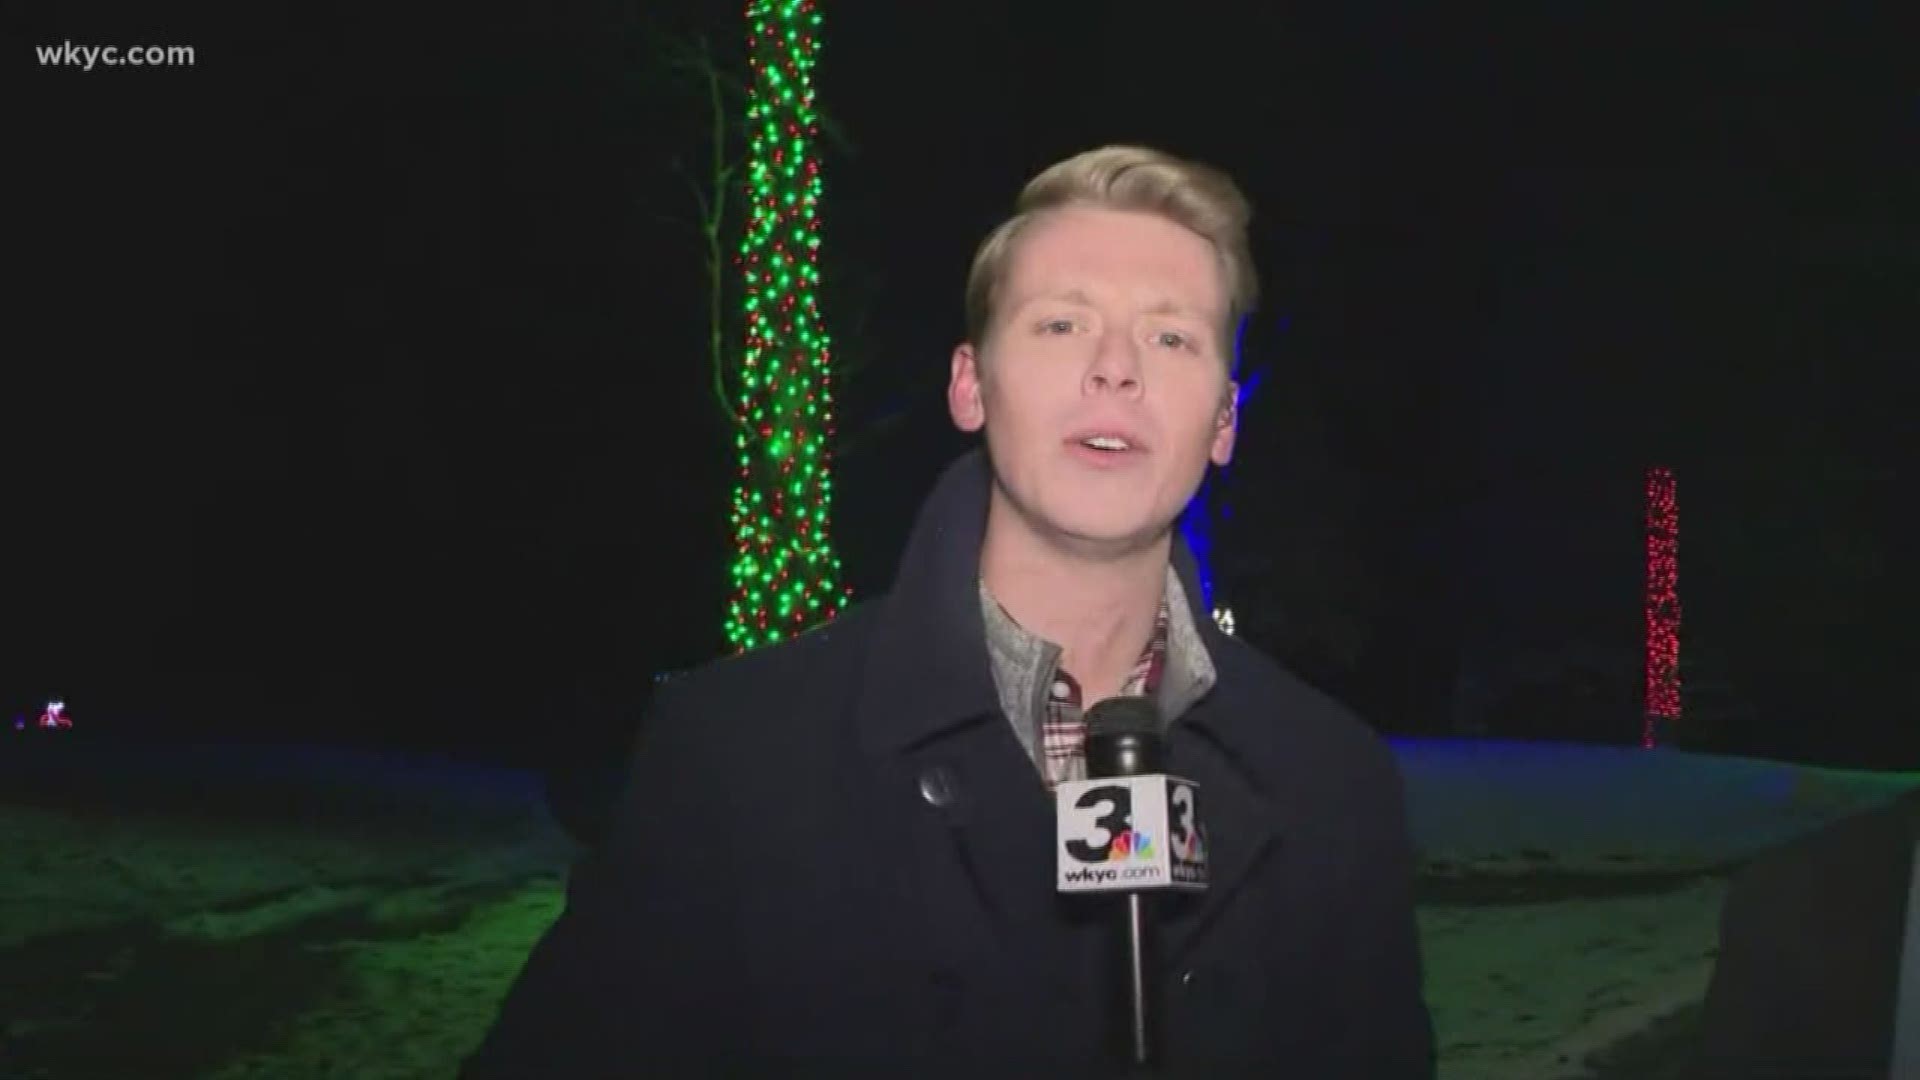 Austin Love checks out Bethlehem Hills, the Christmas lighting display at Berkshire Hills golf course.